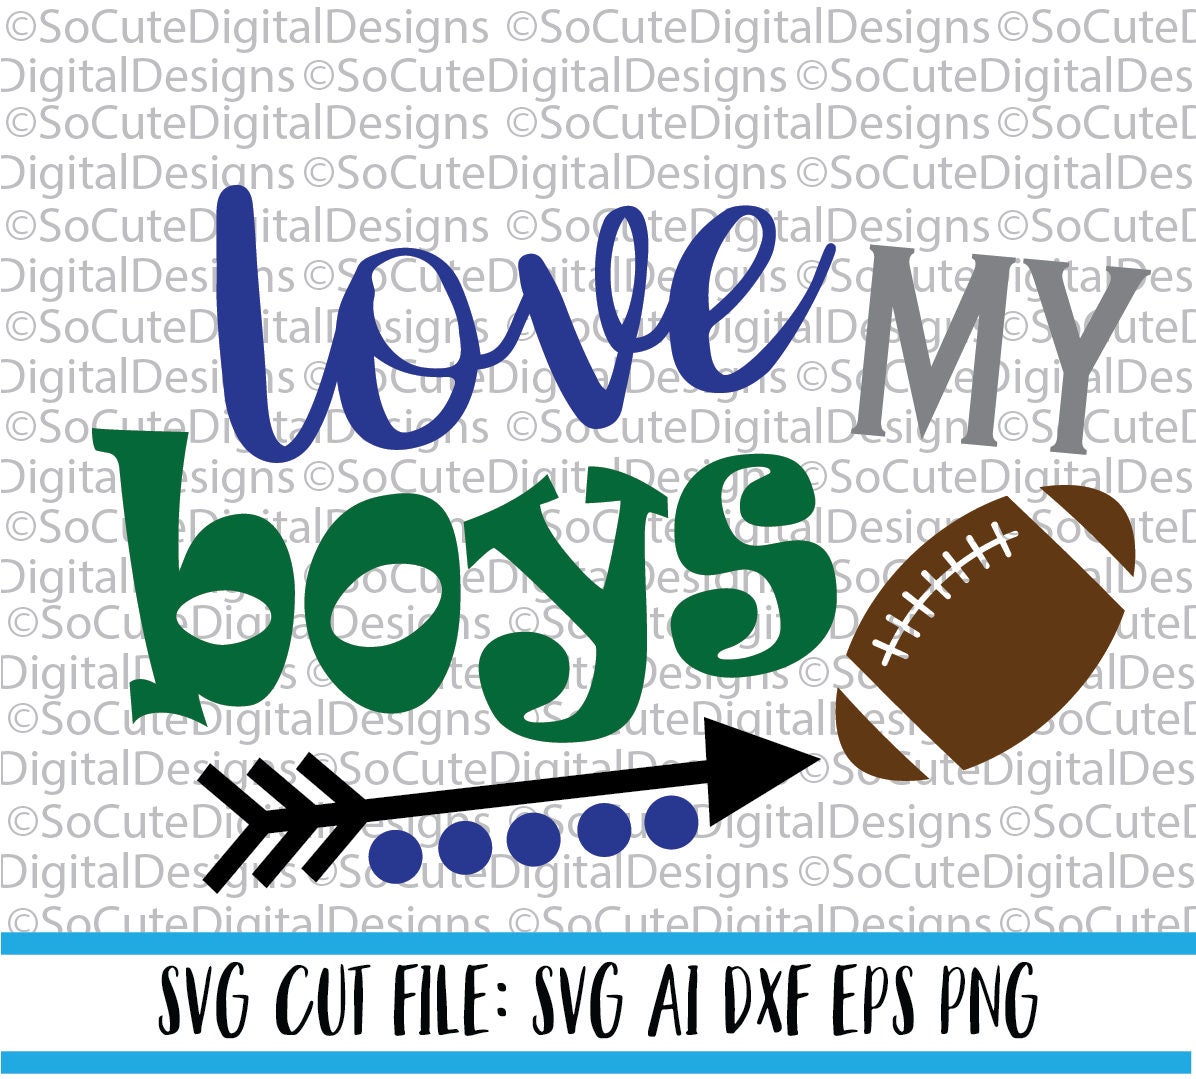 Free Free 200 Love My Boy Svg SVG PNG EPS DXF File